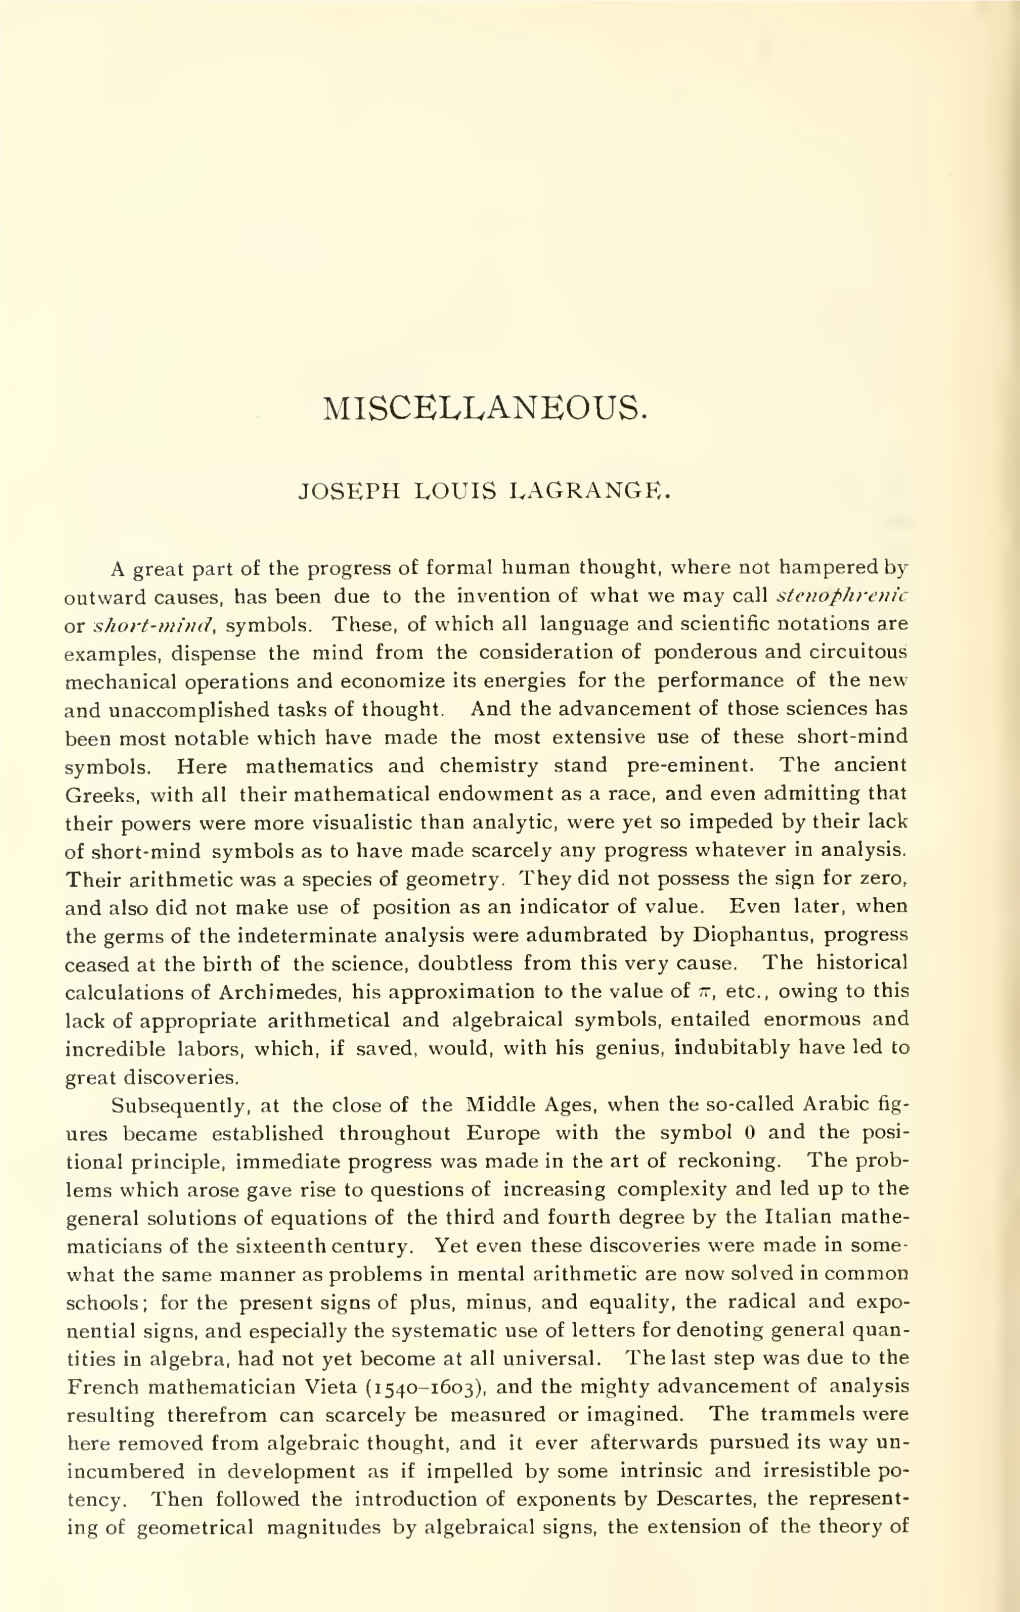 Joseph Louis Lagrange. Mathematician. Biographical Sketch